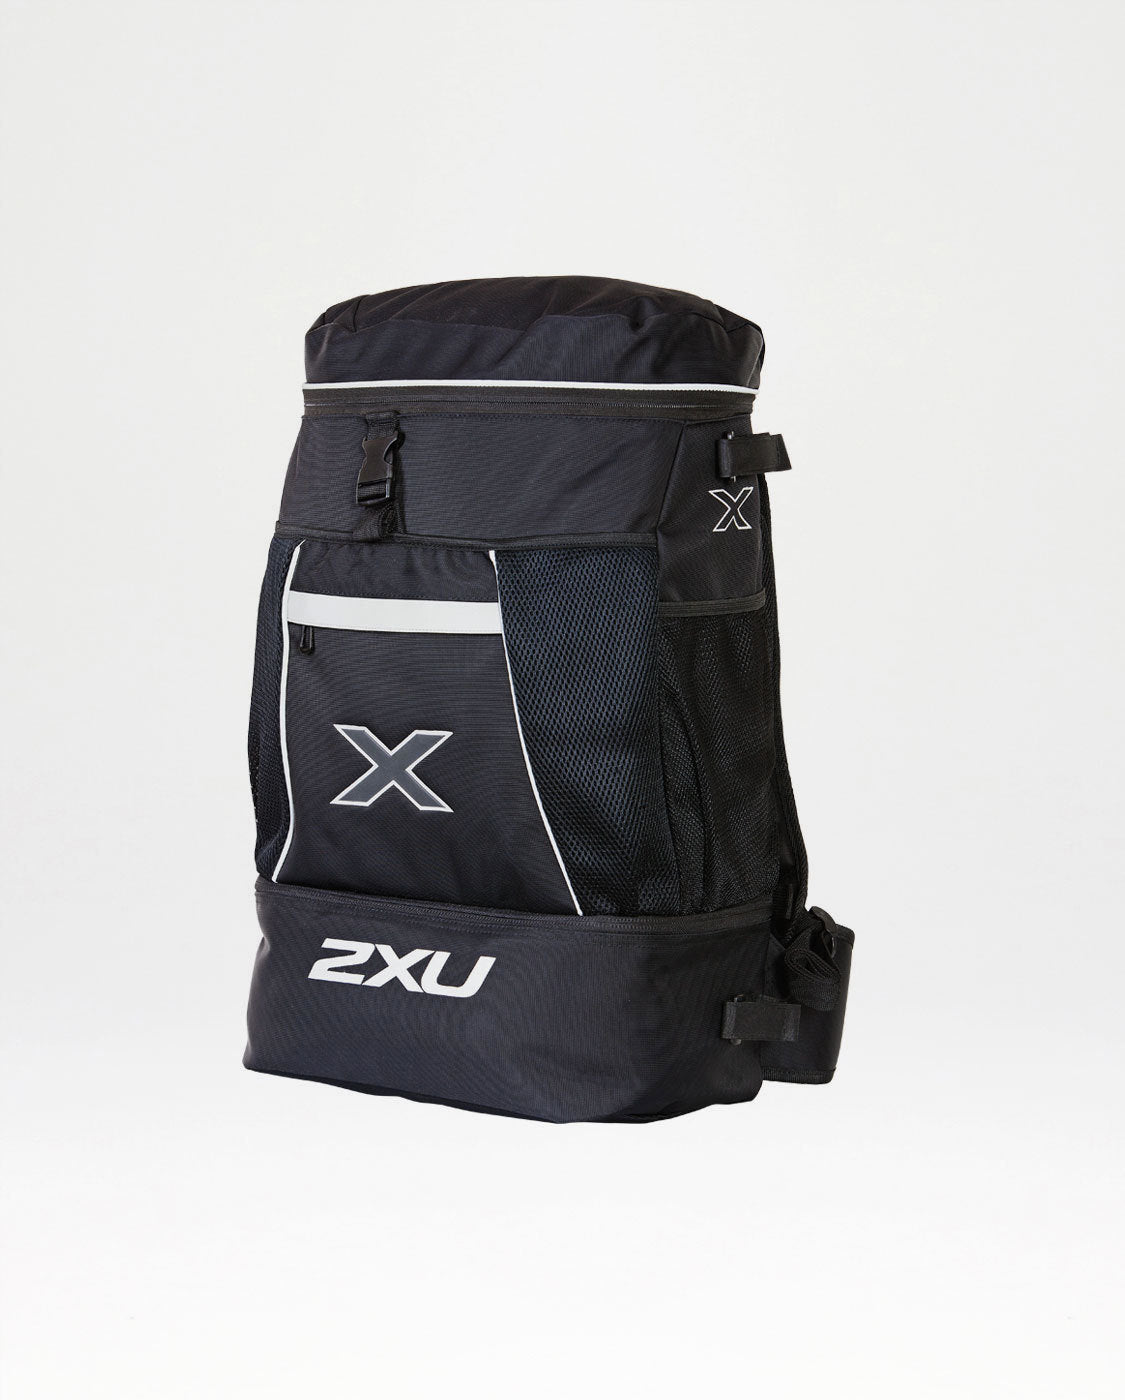 2XU Transition Bag